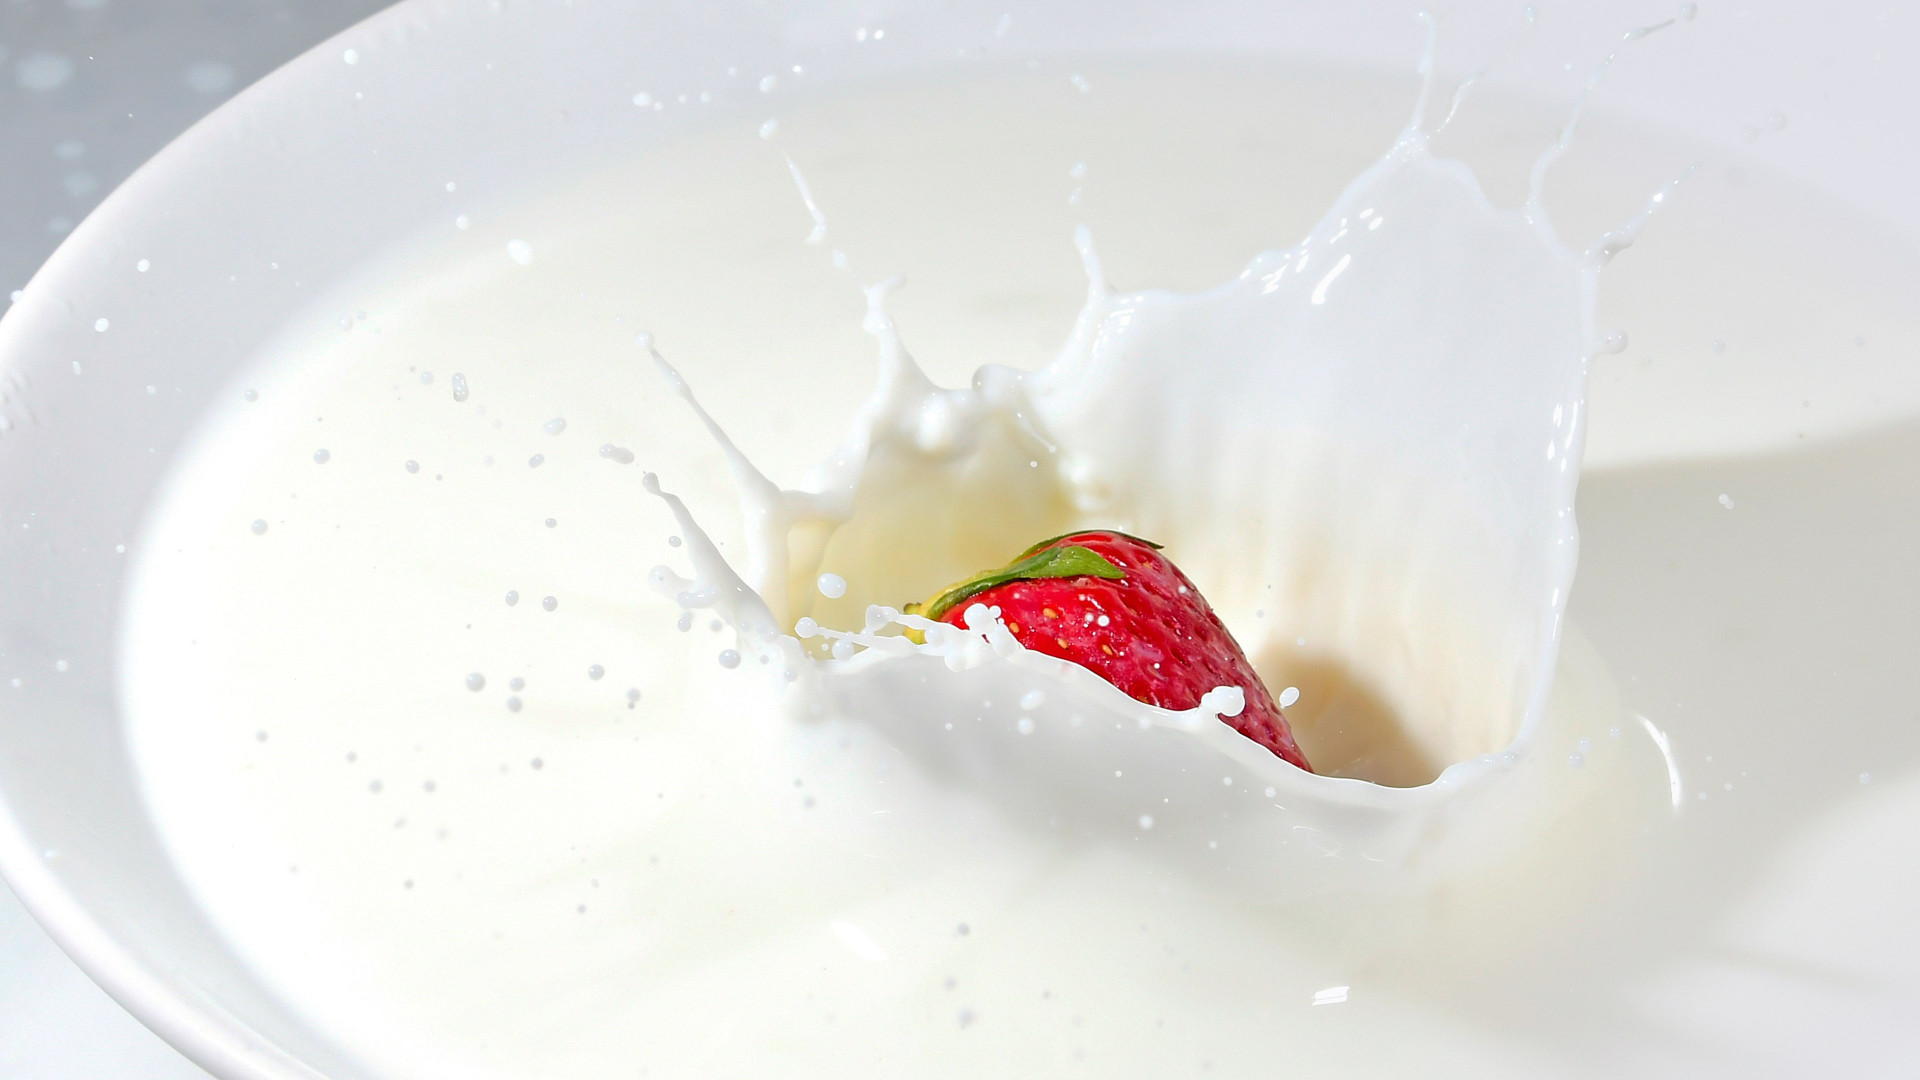 Strawberry splashing in milk wallpaper 1920x1080